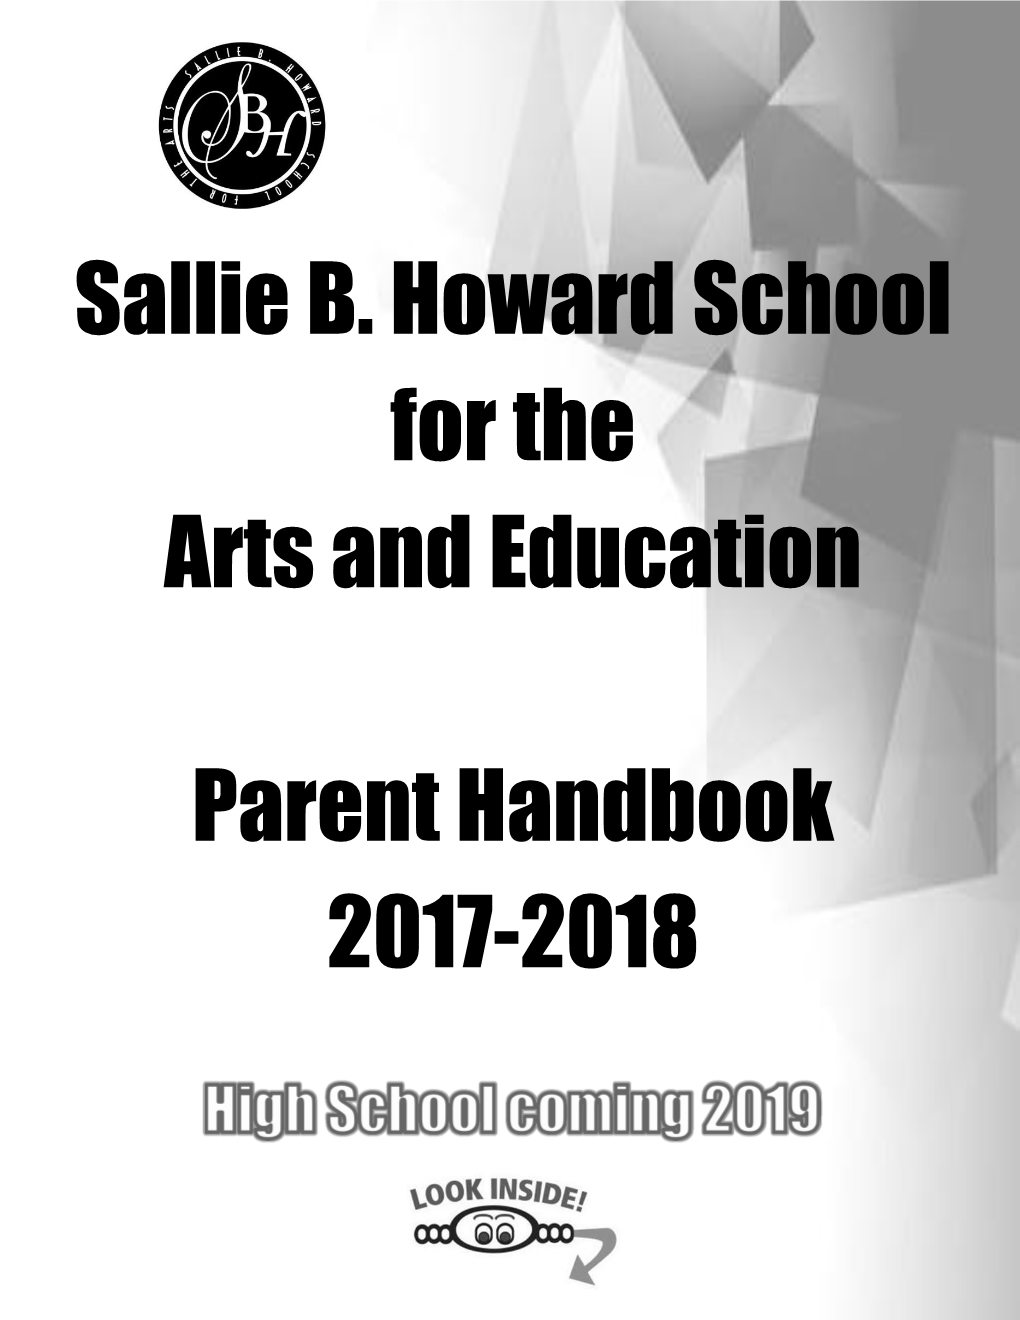 Sallie B. Howard School for the Arts and Education Parent Handbook 2017-2018